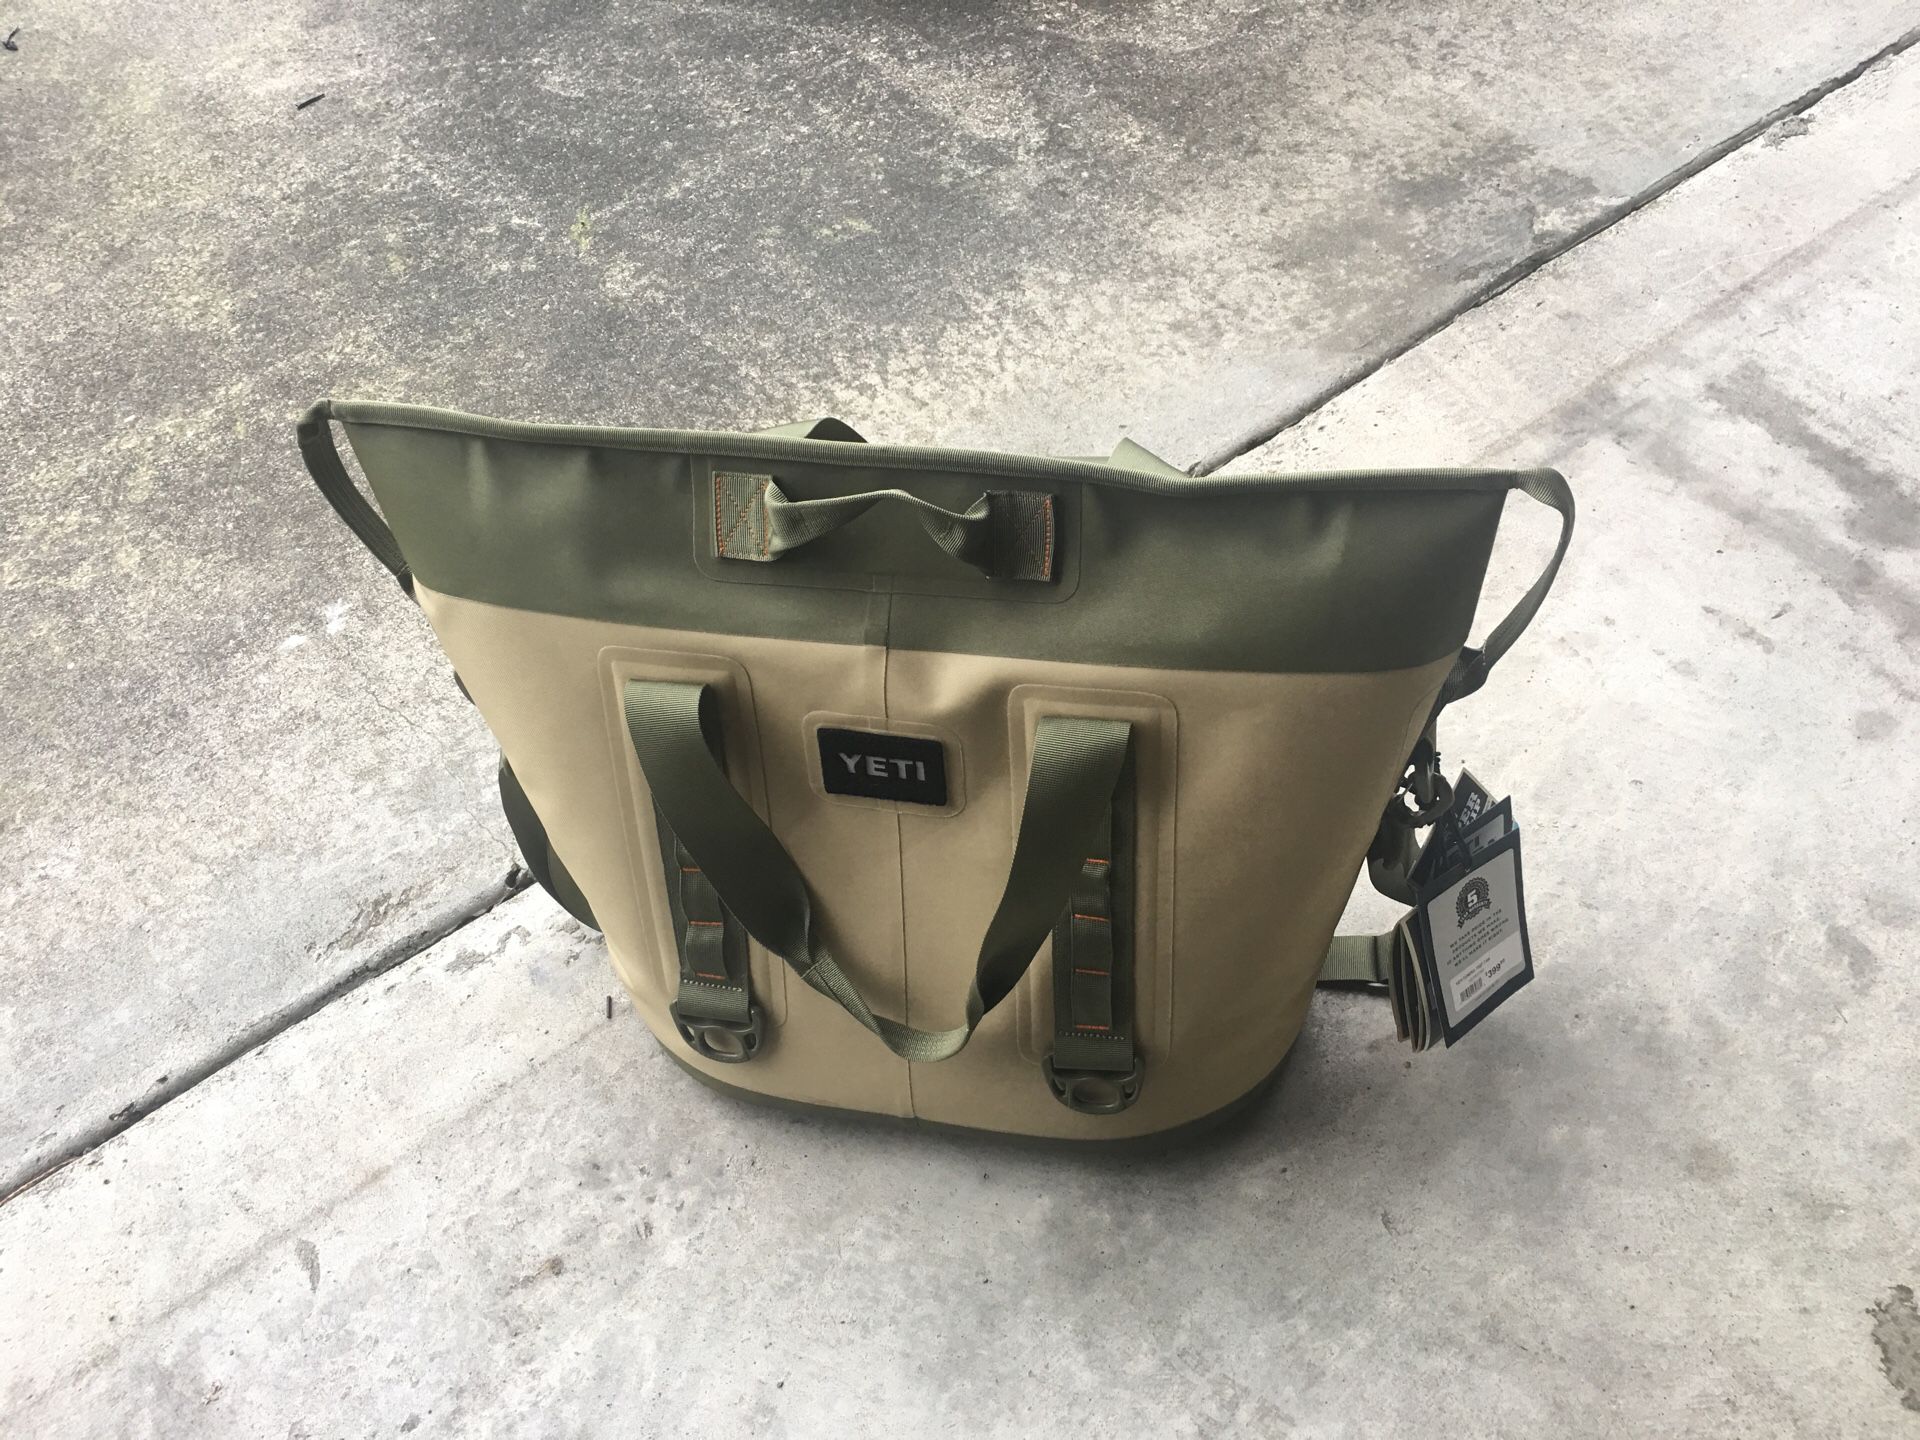 Yeti cooler bag type new